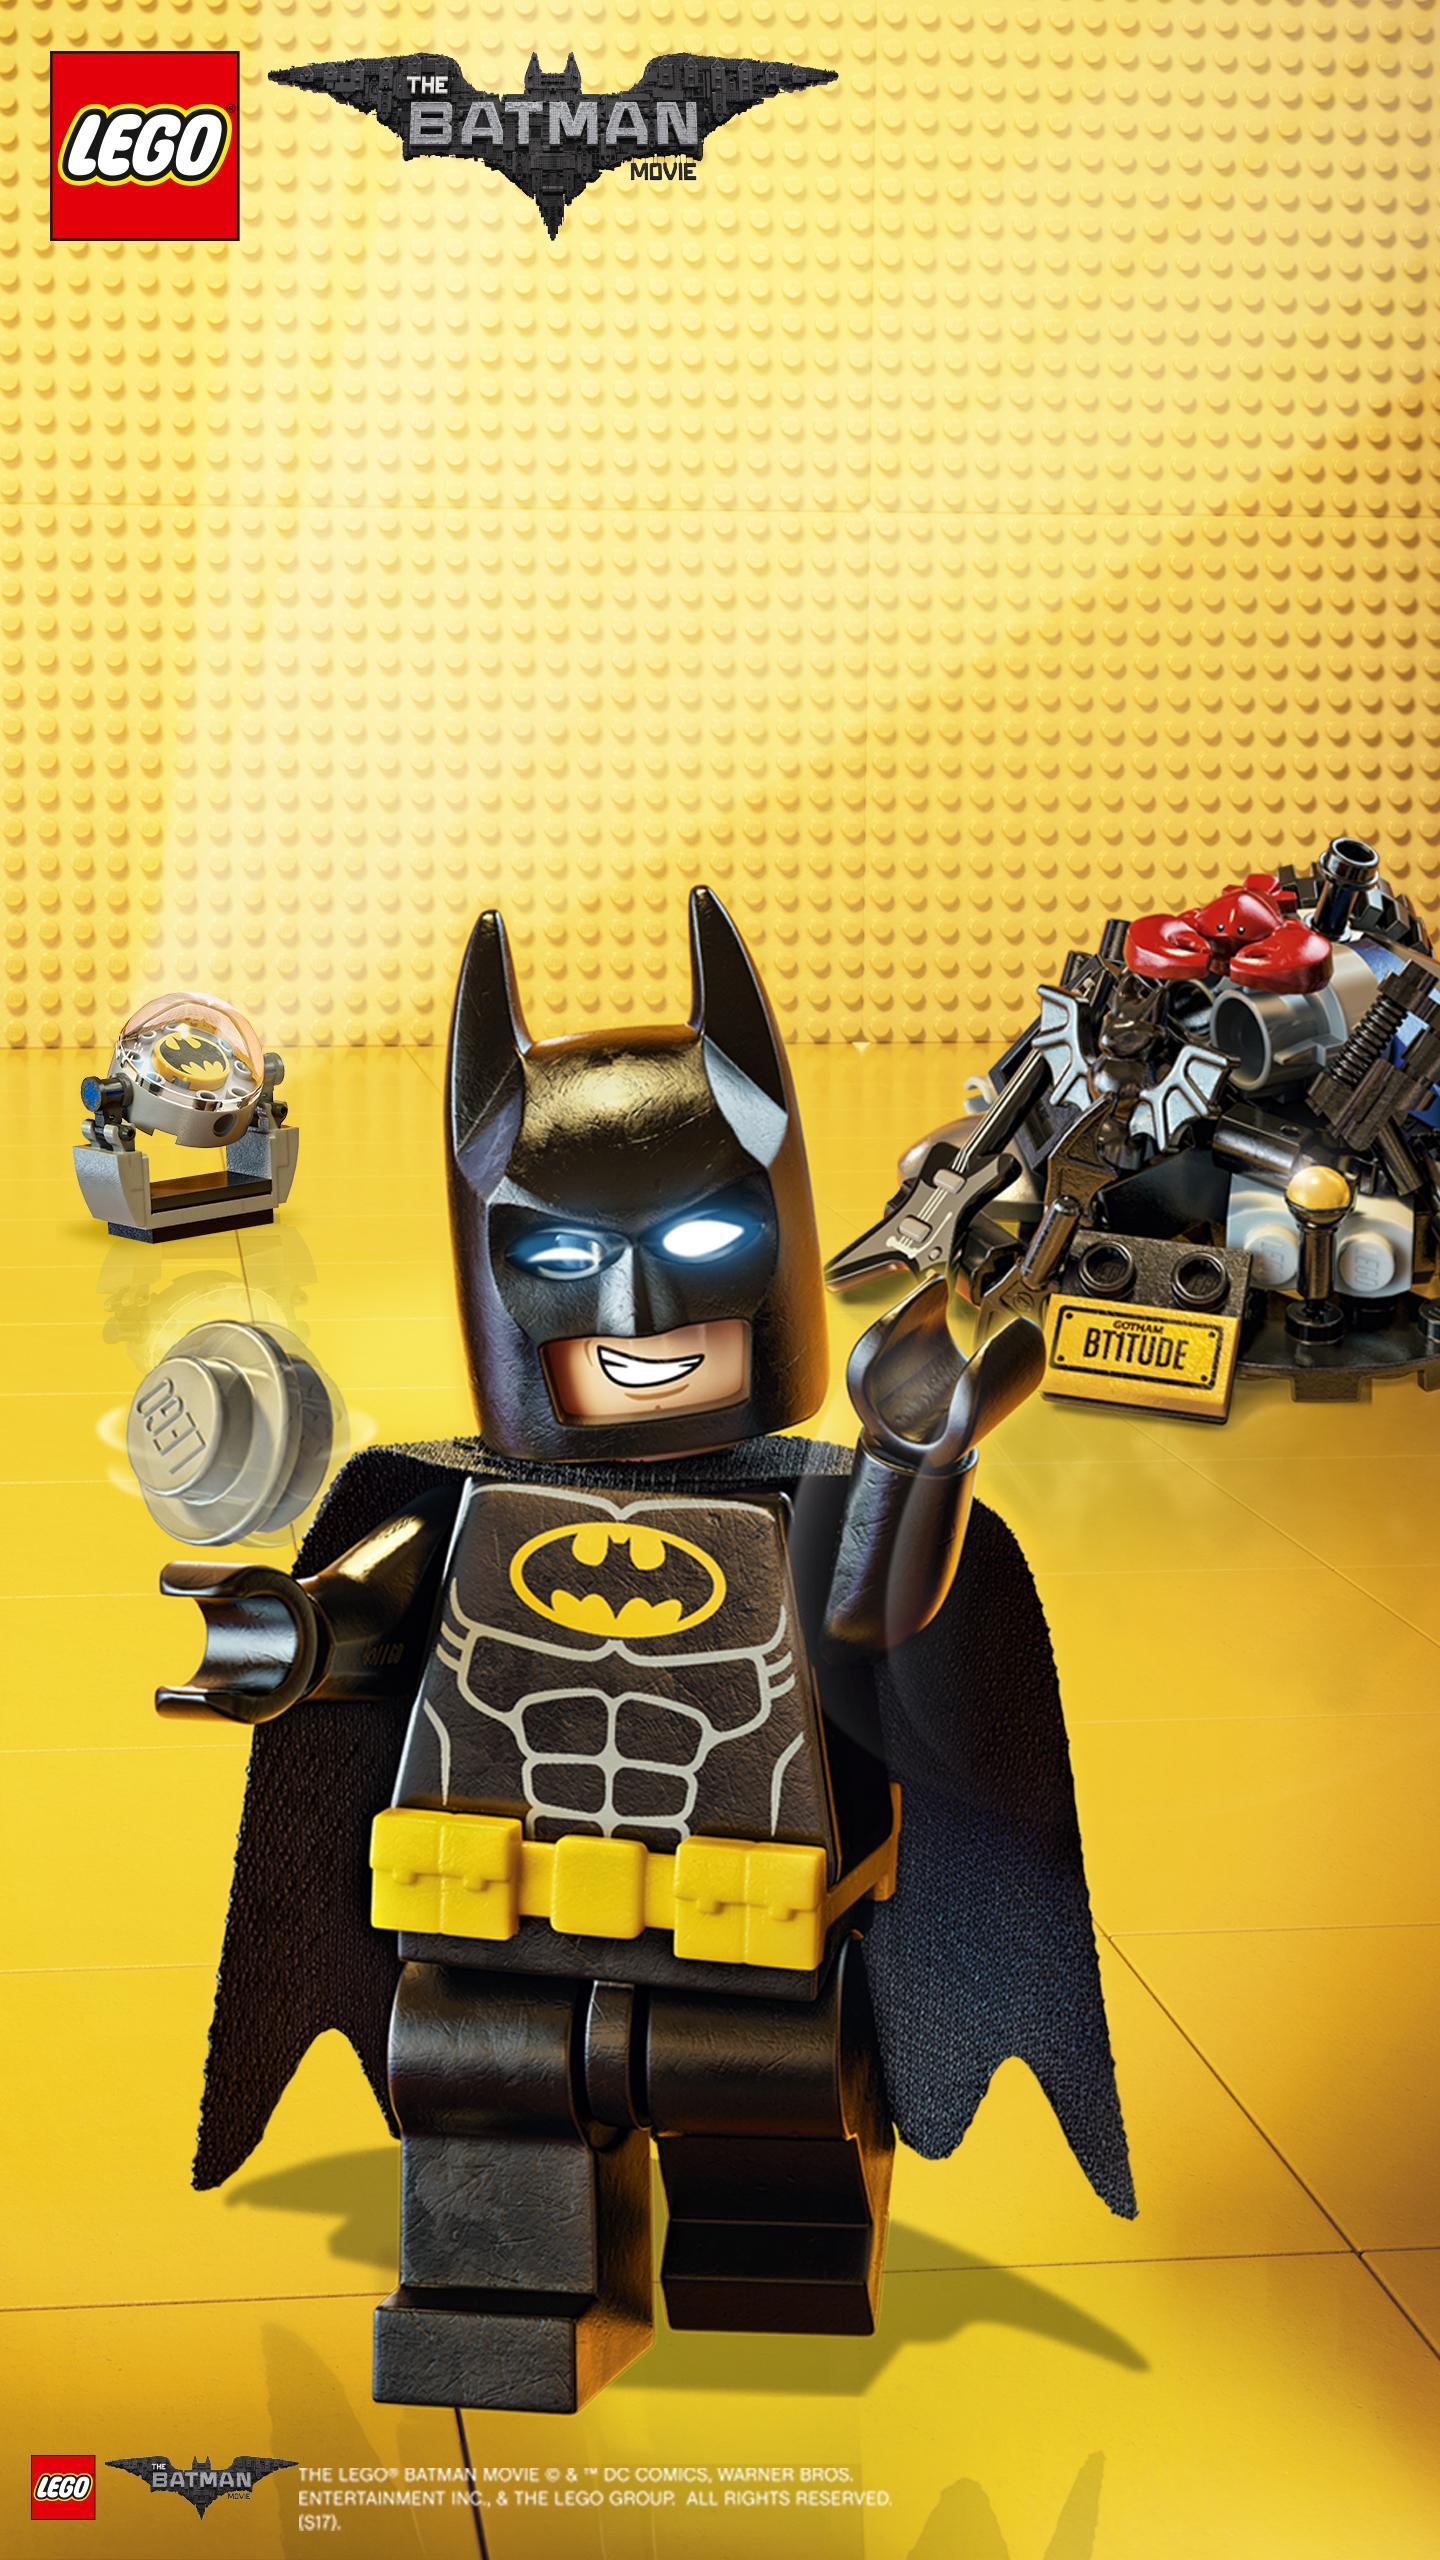 The LEGO Batman Movie Wallpaper